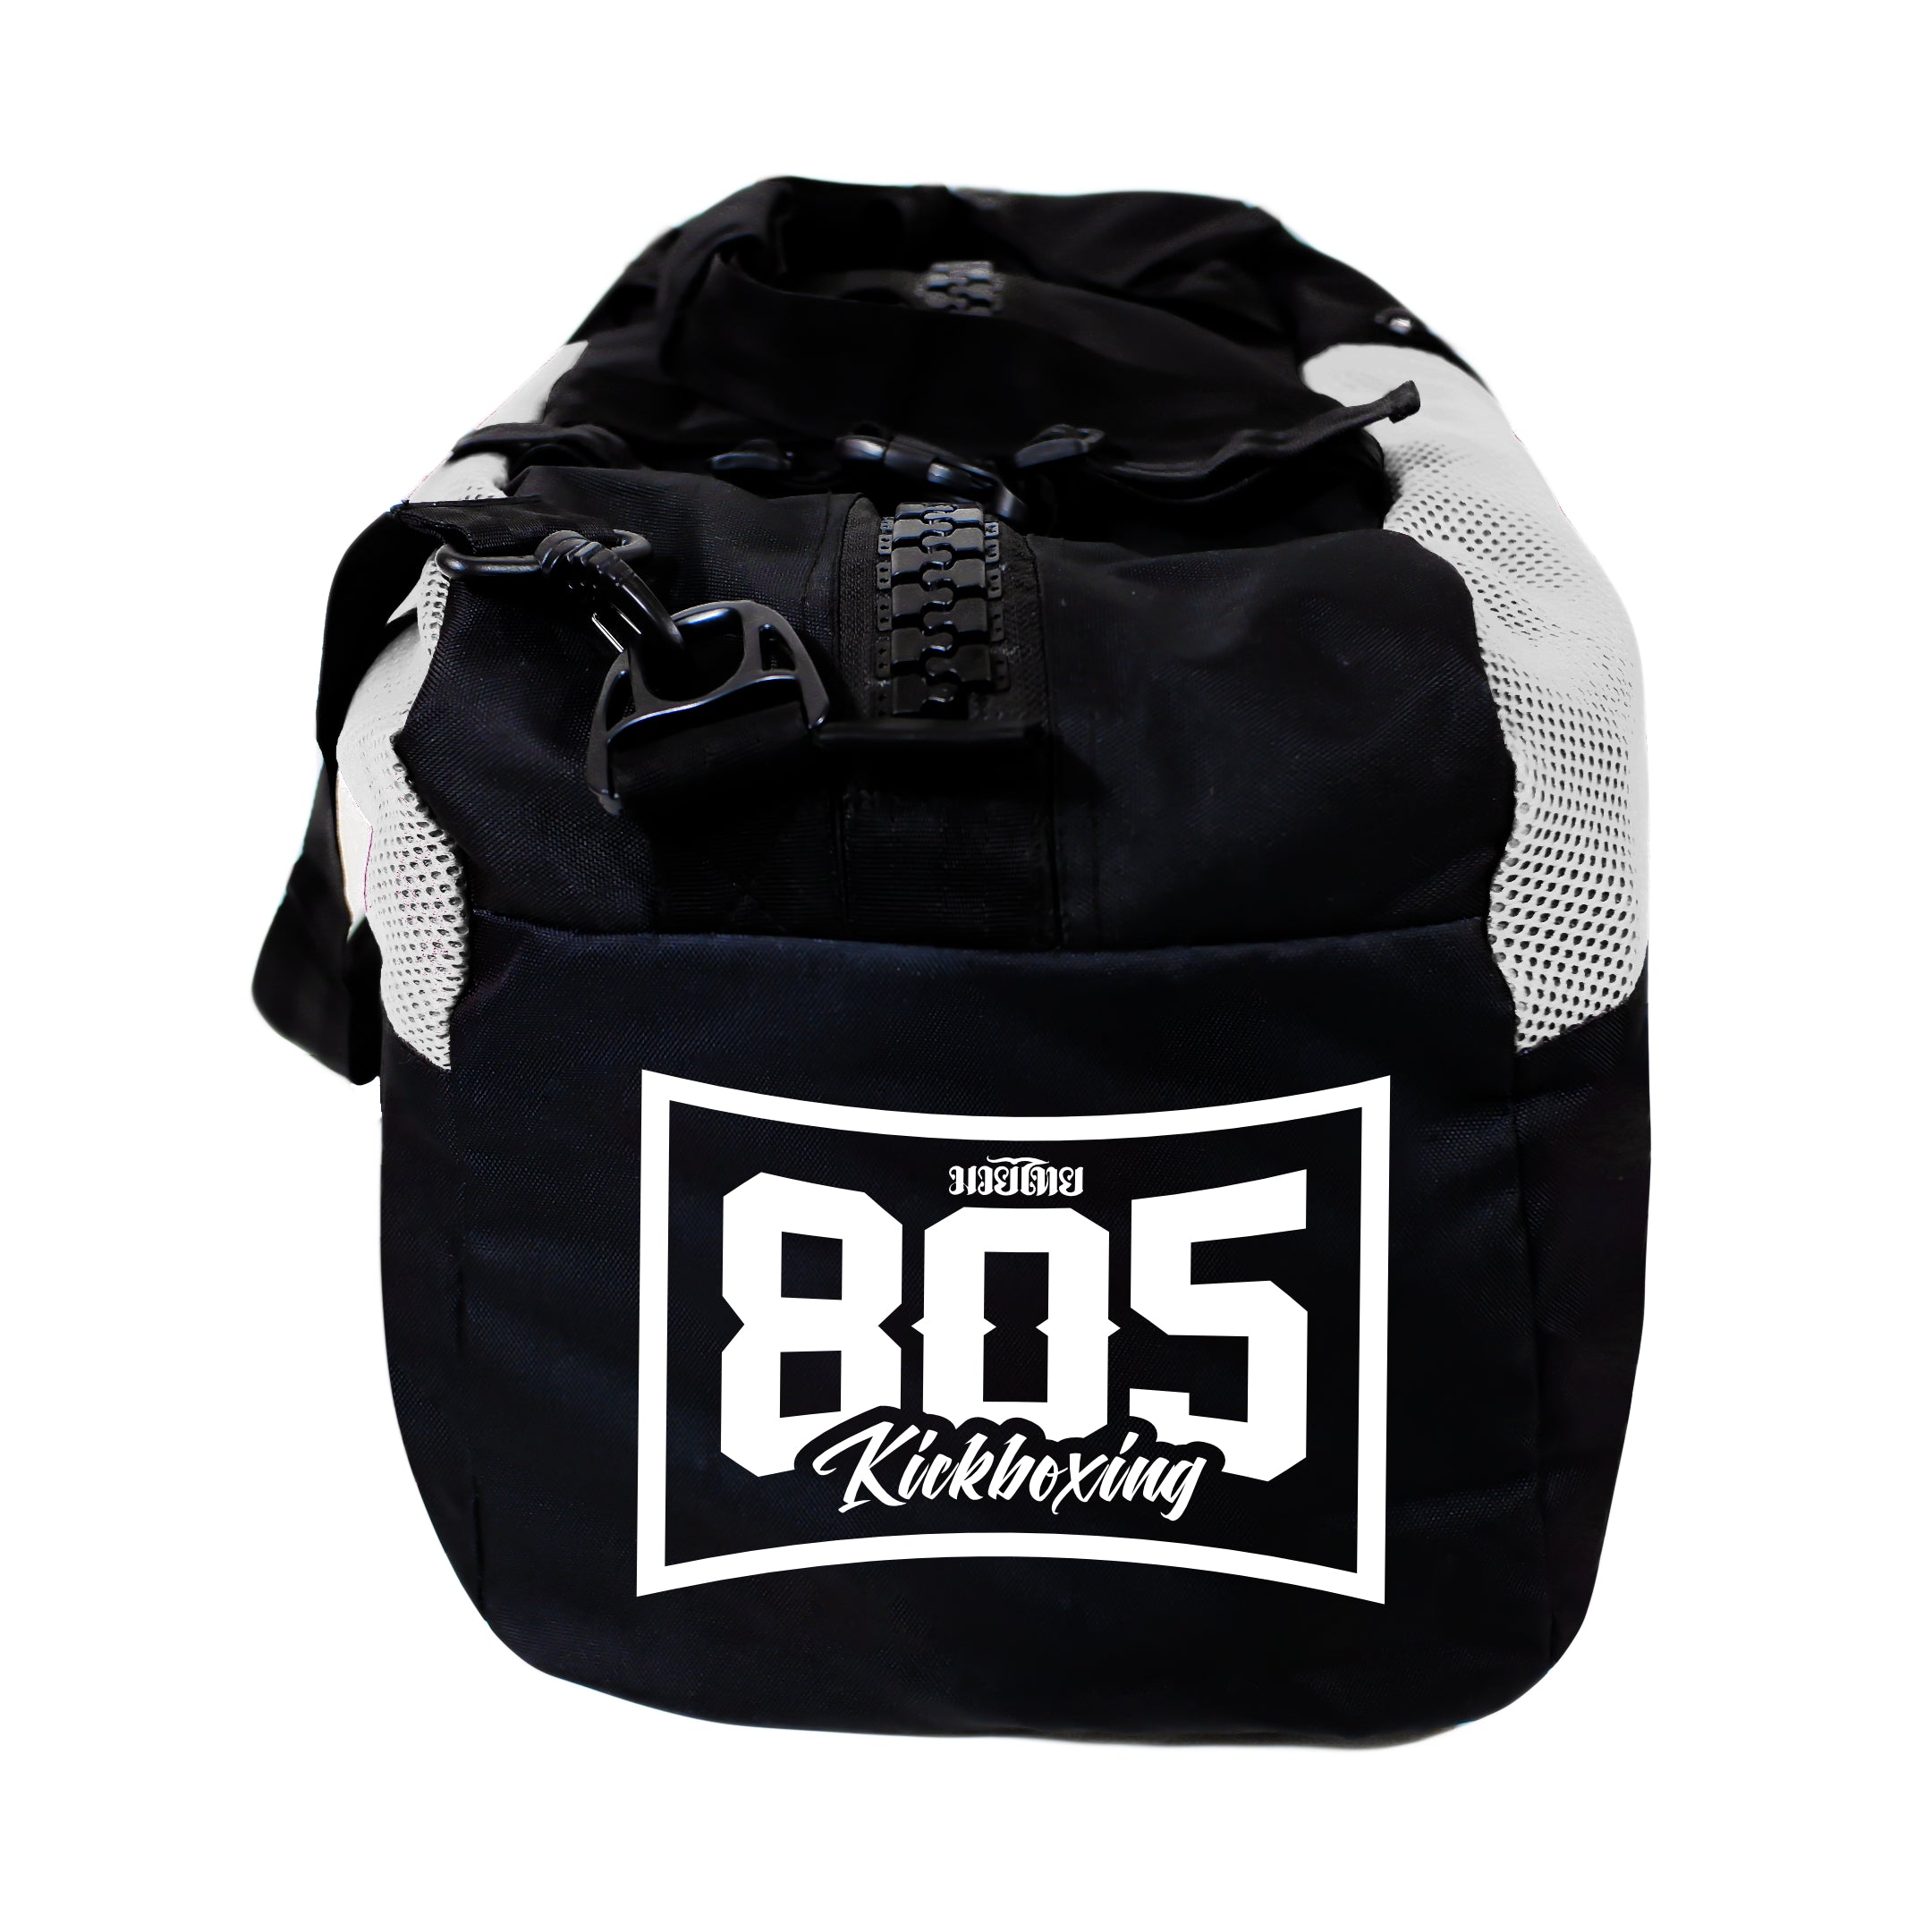 805 Kickboxing Gear Bag